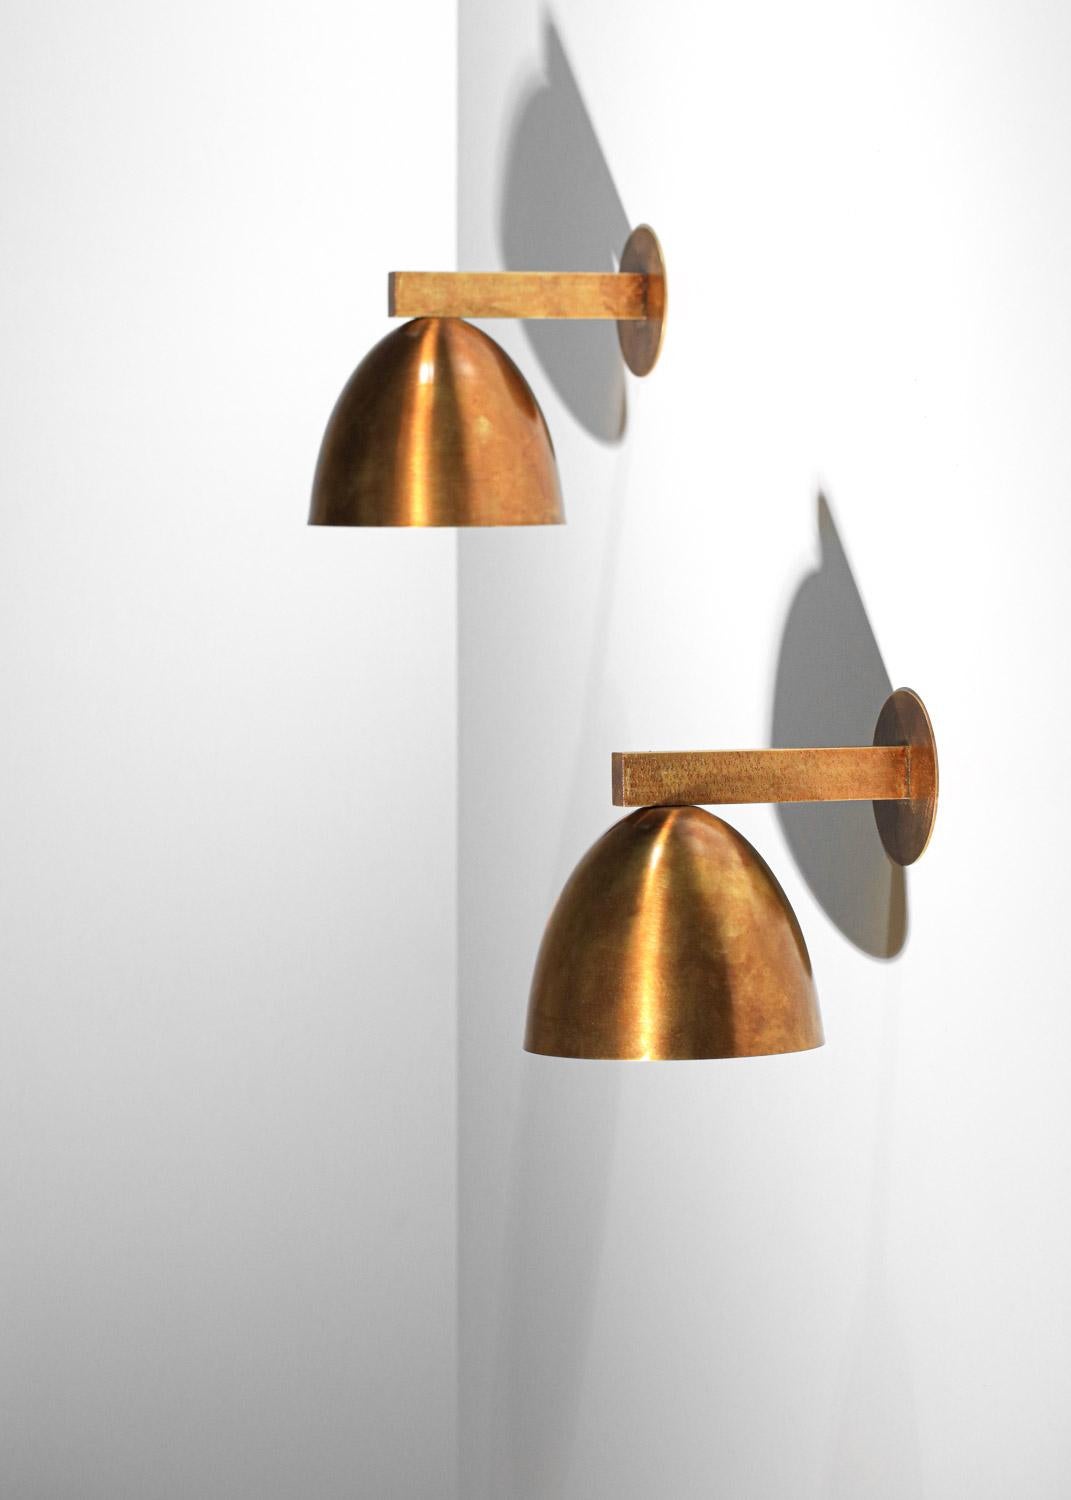 Danke studio modern sconces patinated solid brass contemporary design For Sale 3